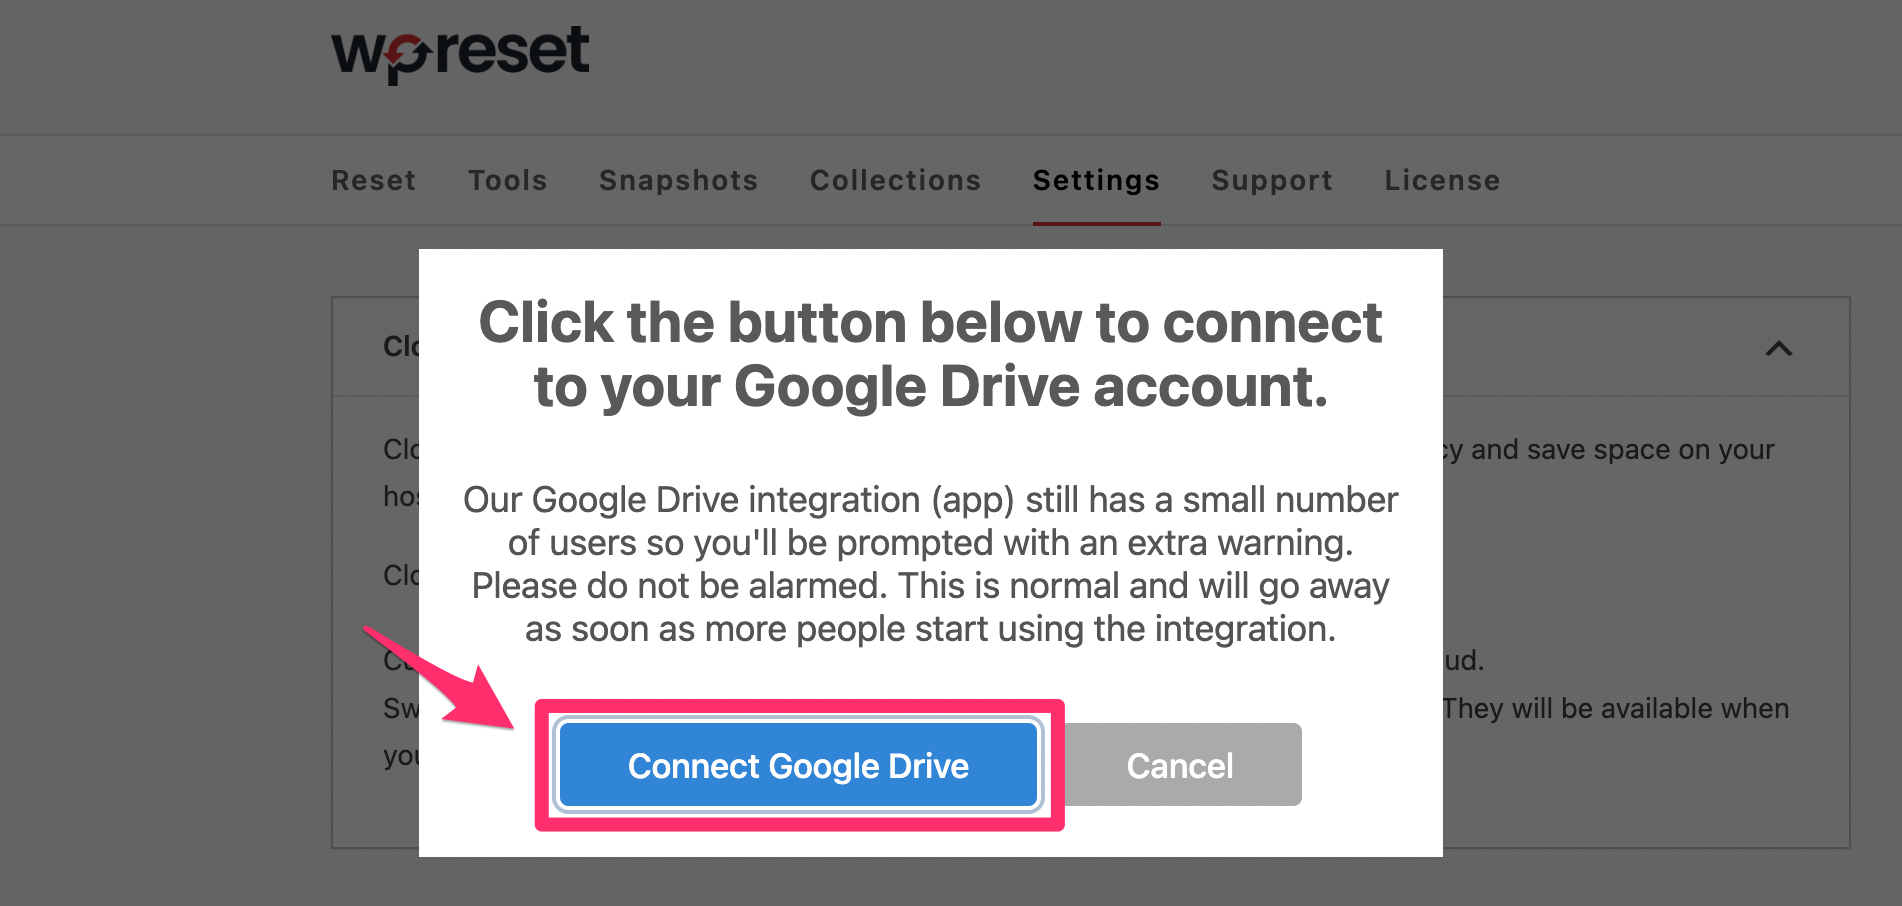 『Connect Google Drive』をクリック